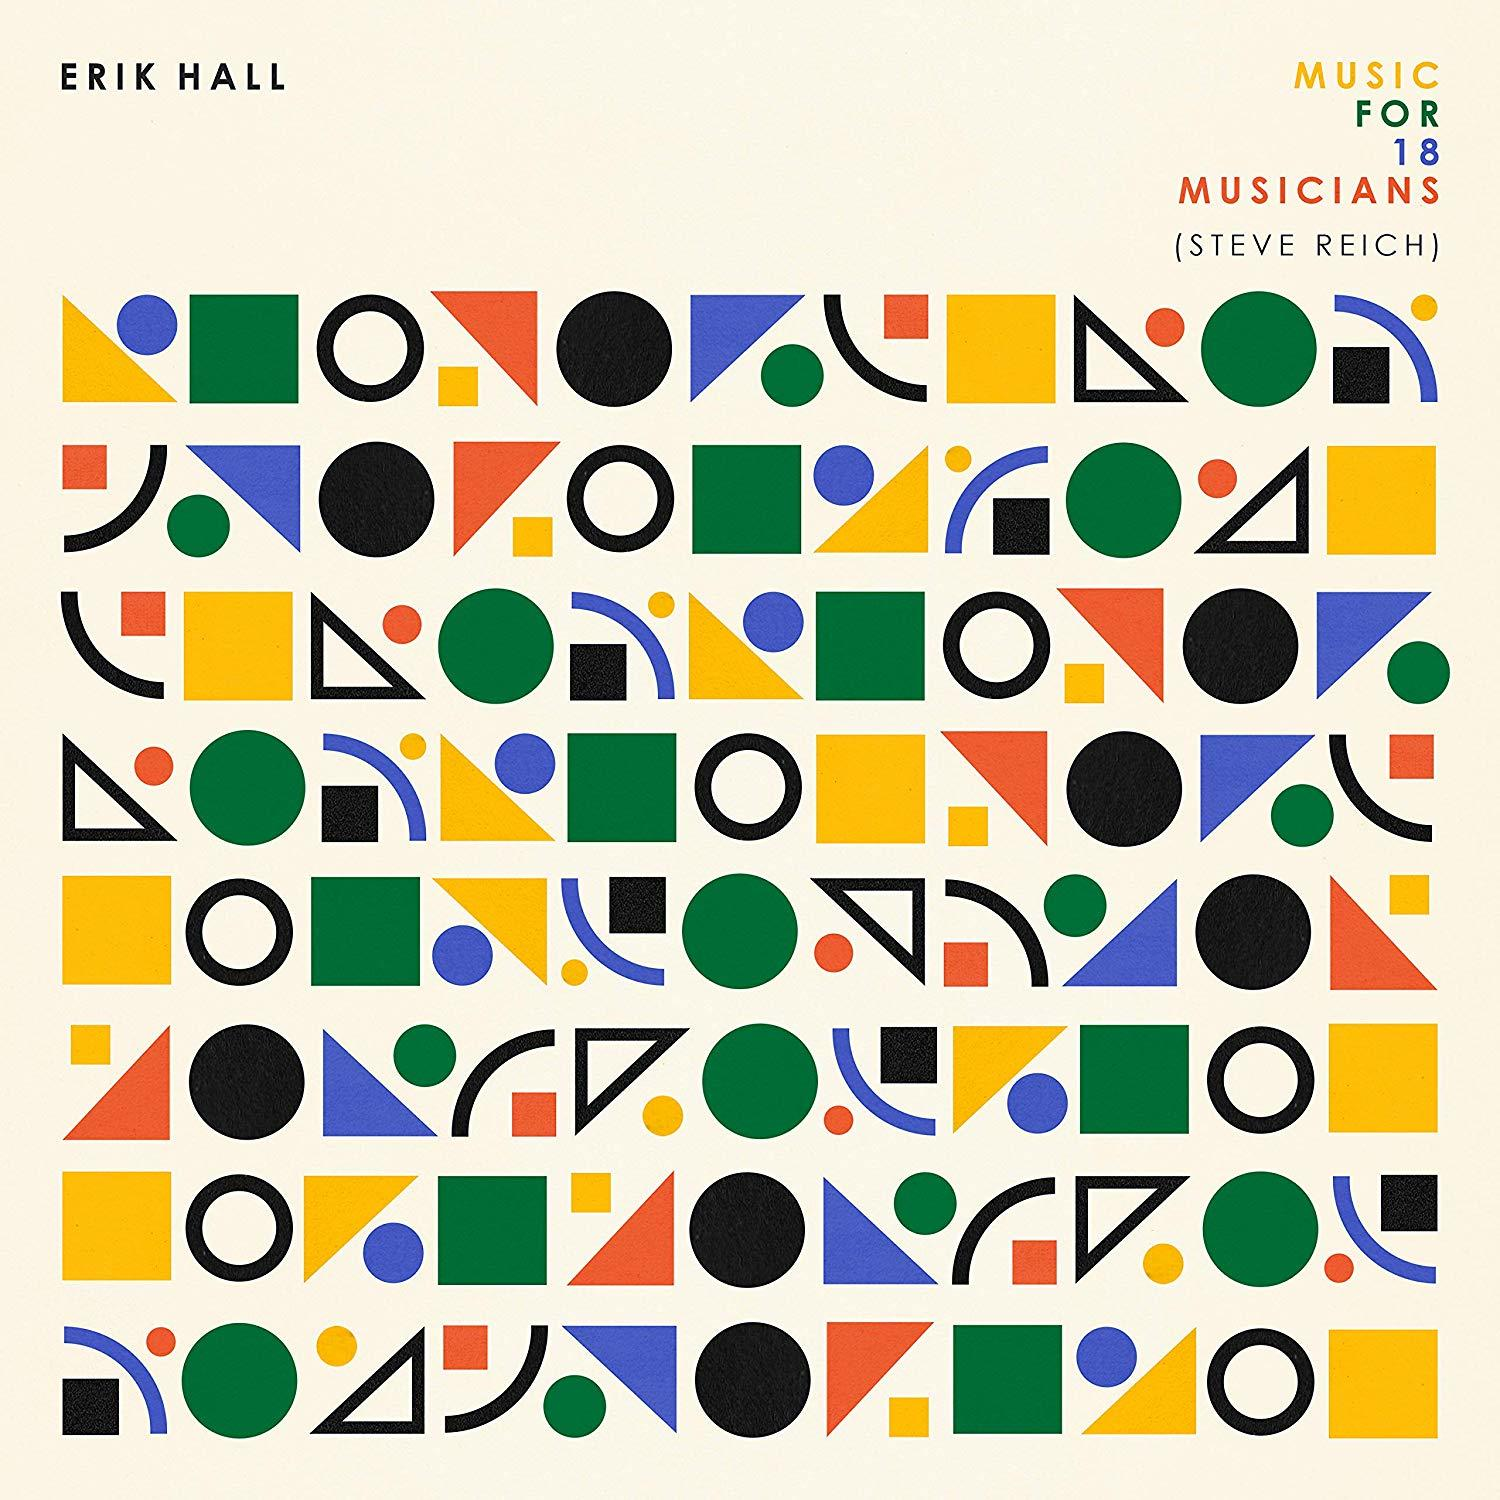 FOR - MUSICIANS (STEVE Erik - REICH) 18 Hall MUSIC (Vinyl)